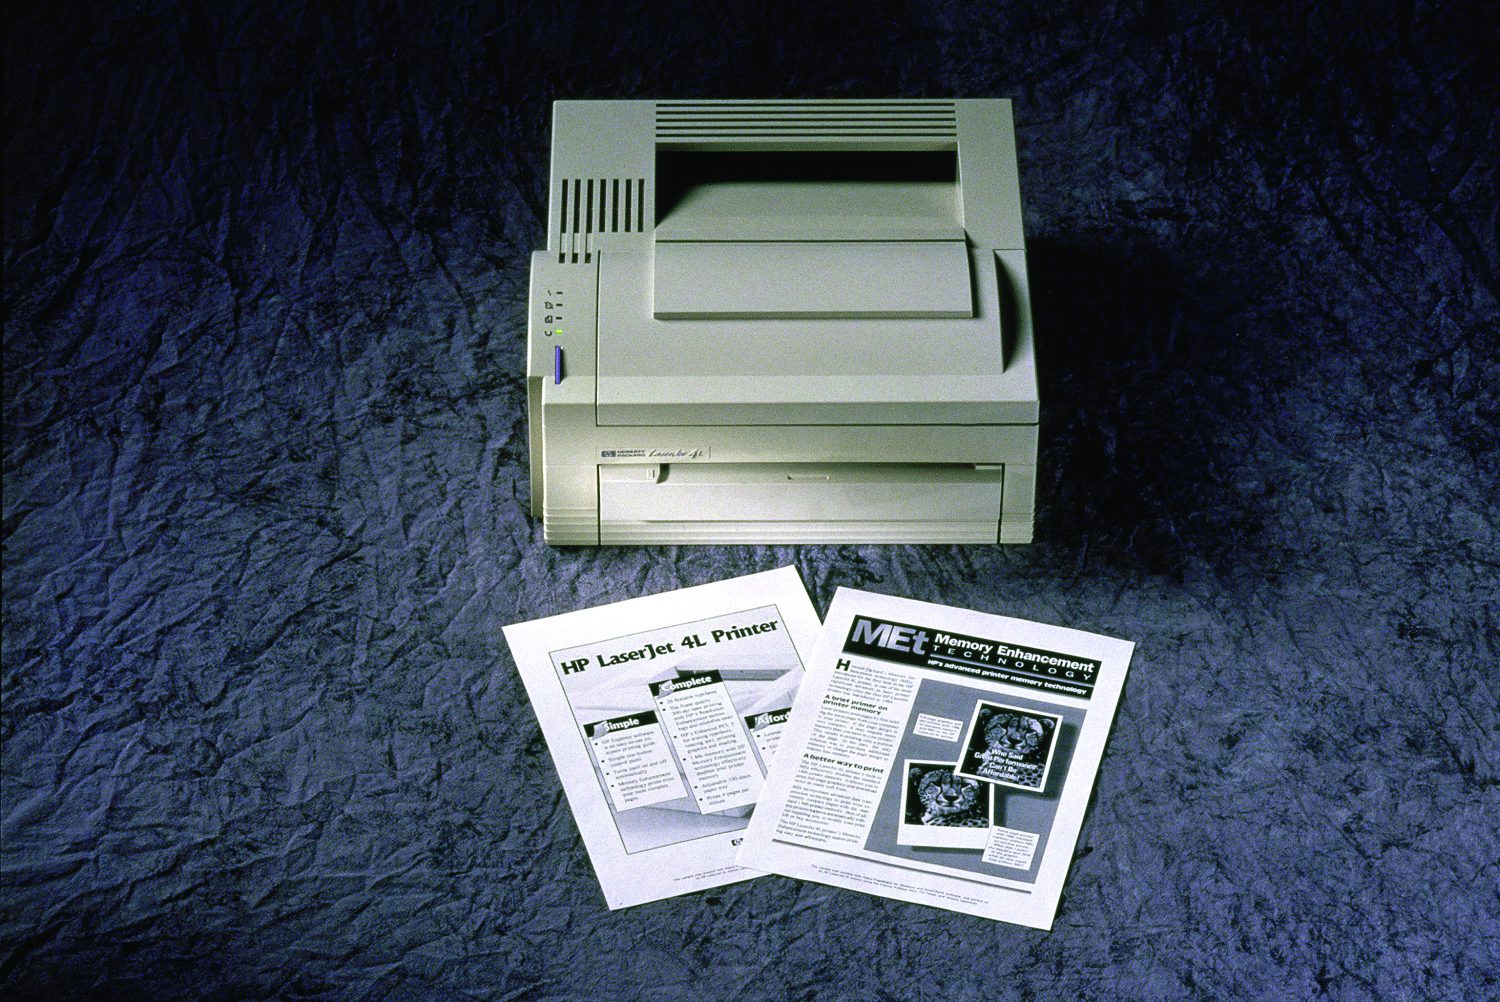 Photo of the Hewlett-Packard LaserJet 4L printer from 1993.